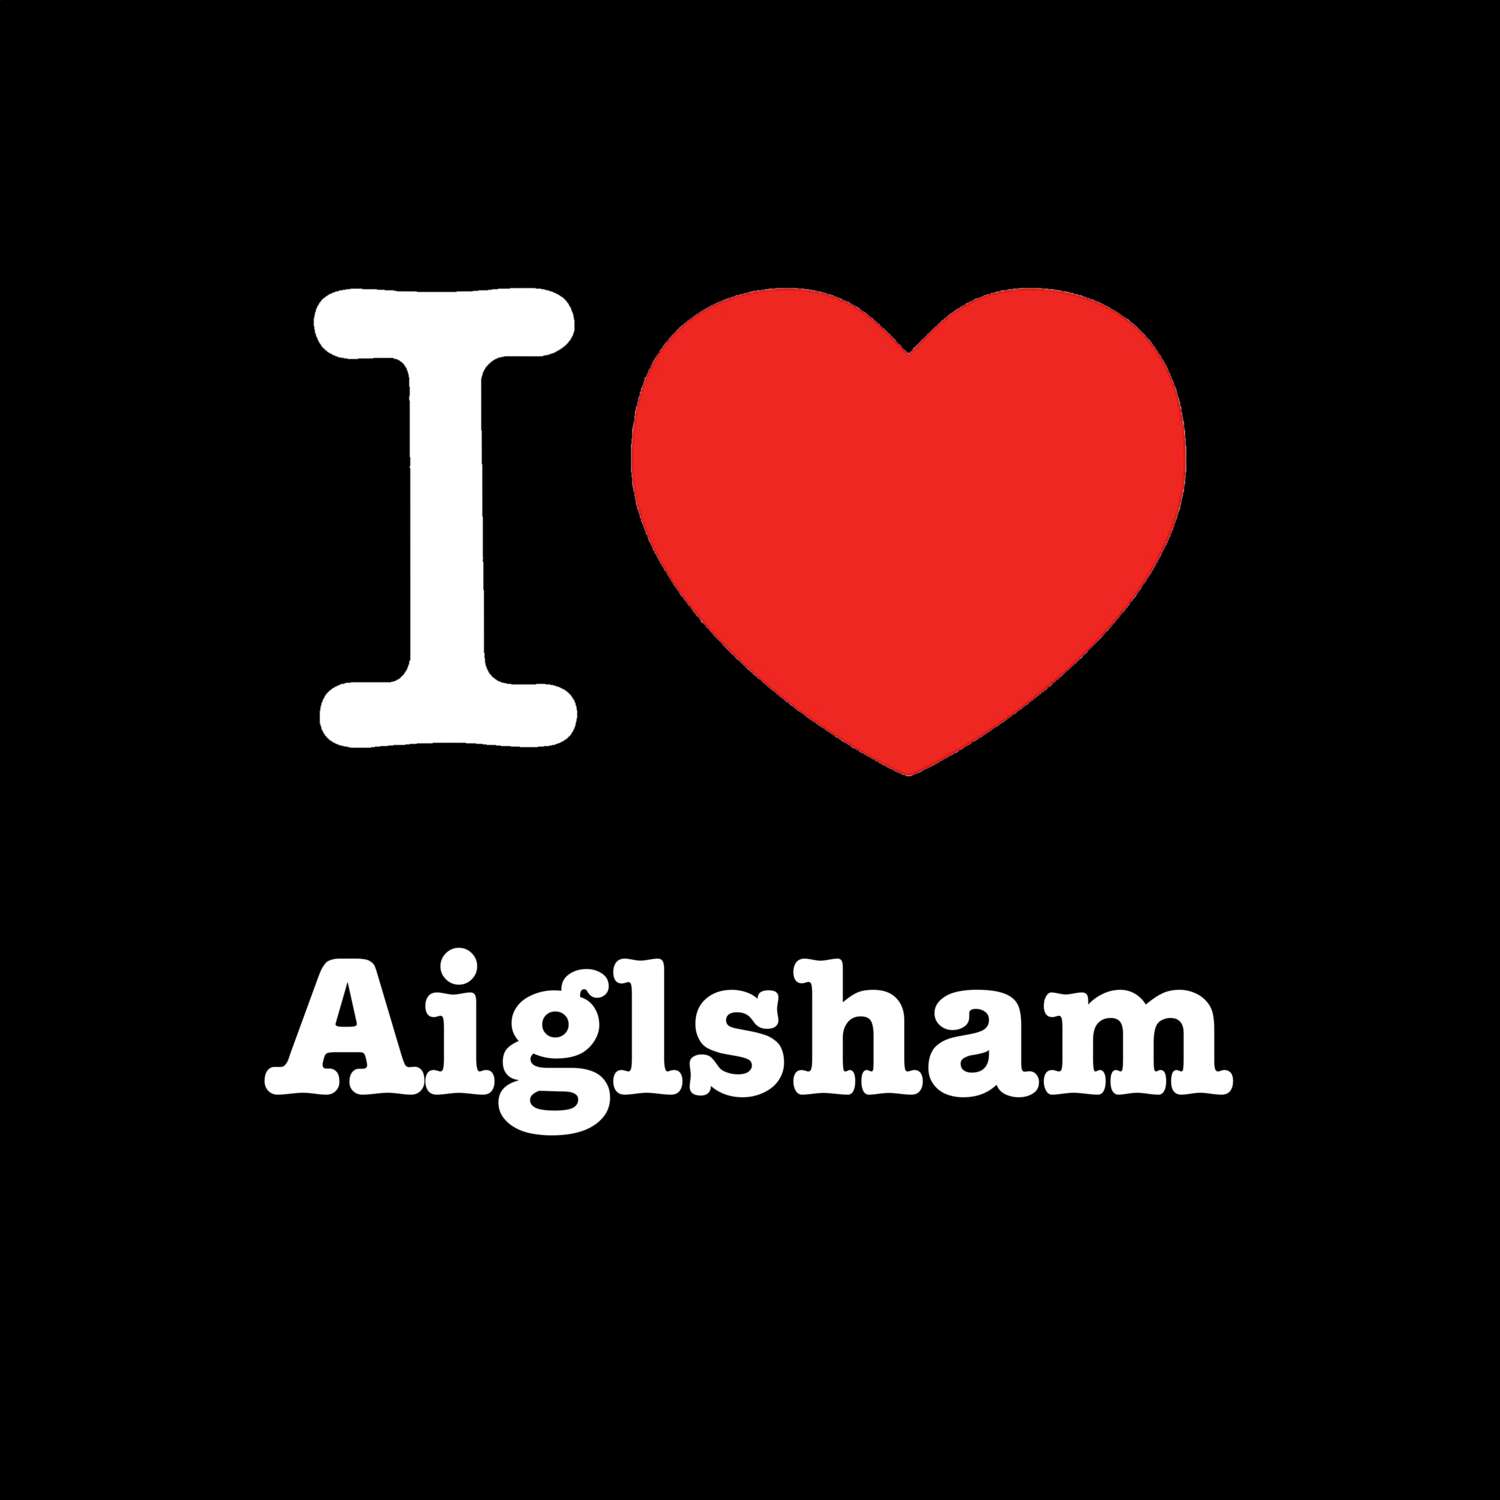 Aiglsham T-Shirt »I love«